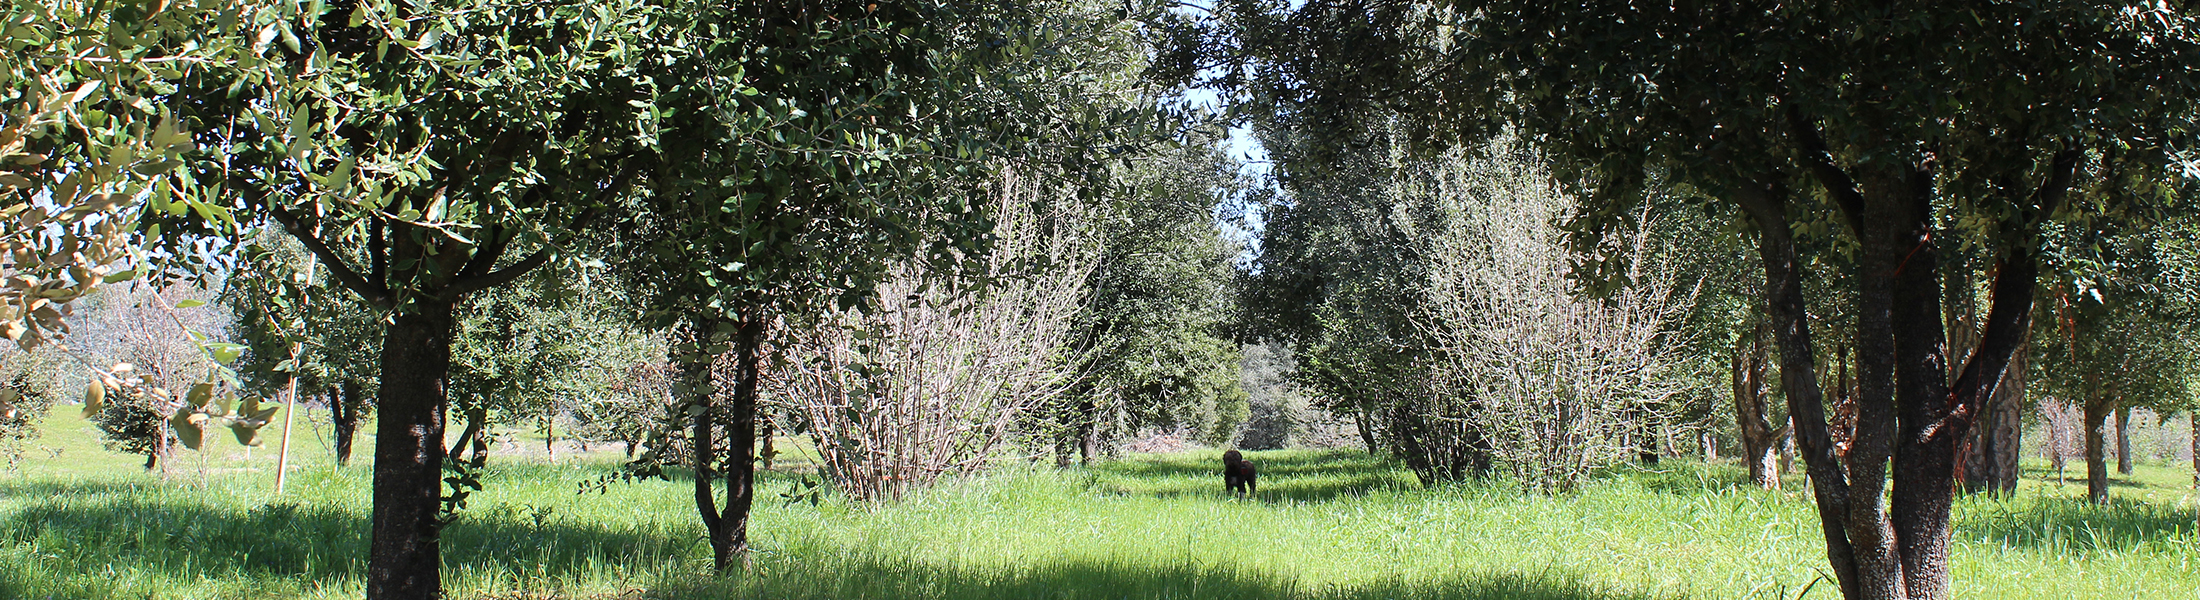 Tesoro Mio (Treasure of mine) is a producing truffle farm